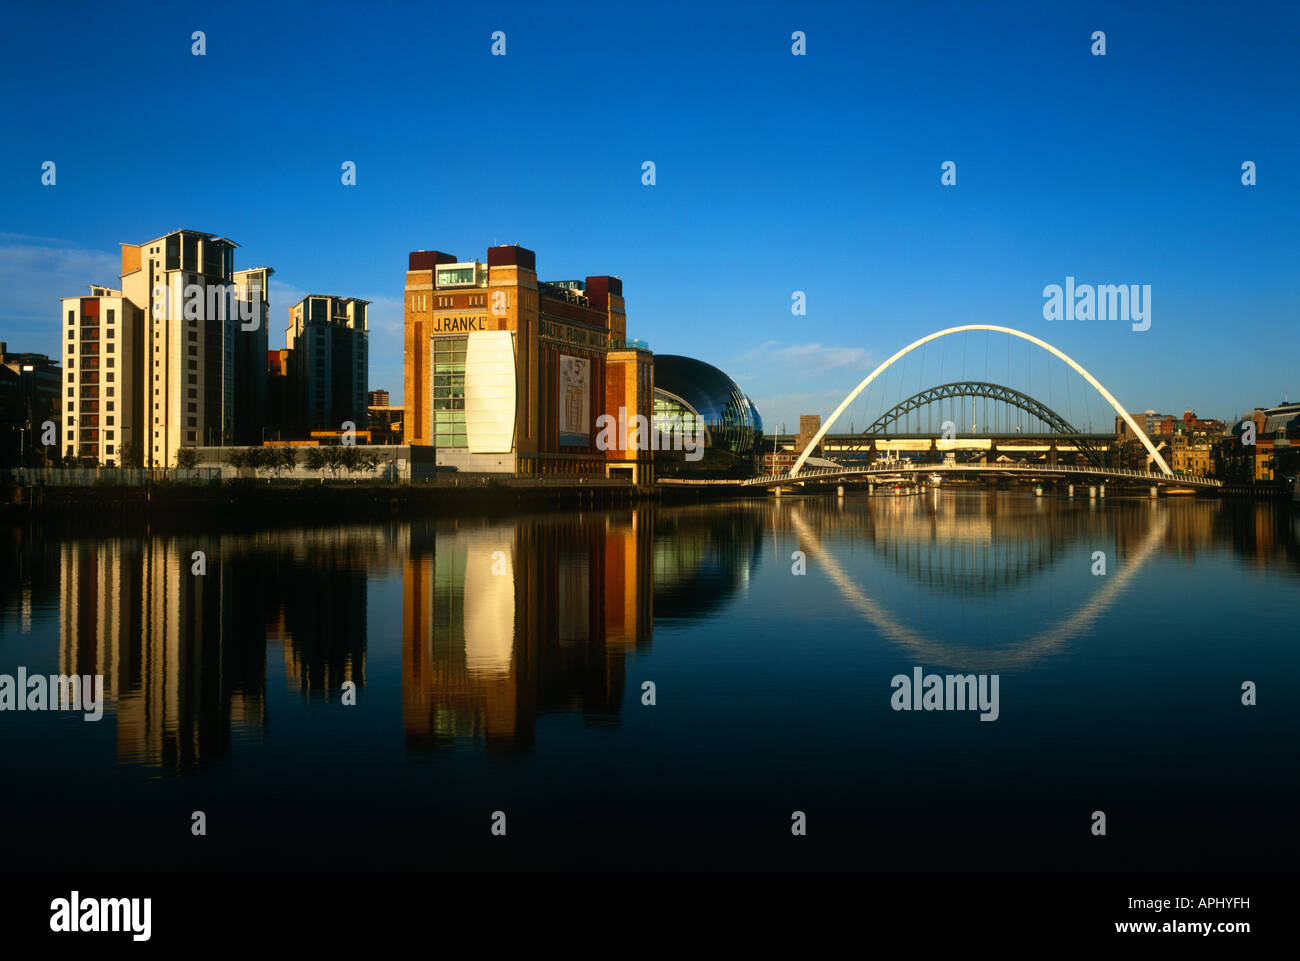 Baltic Arts Centre, Gateshead Millennium Bridge and Tyne Bridge reflected on the River Tyne, Newcastle Gateshead, Tyne and Wear Stock Photo